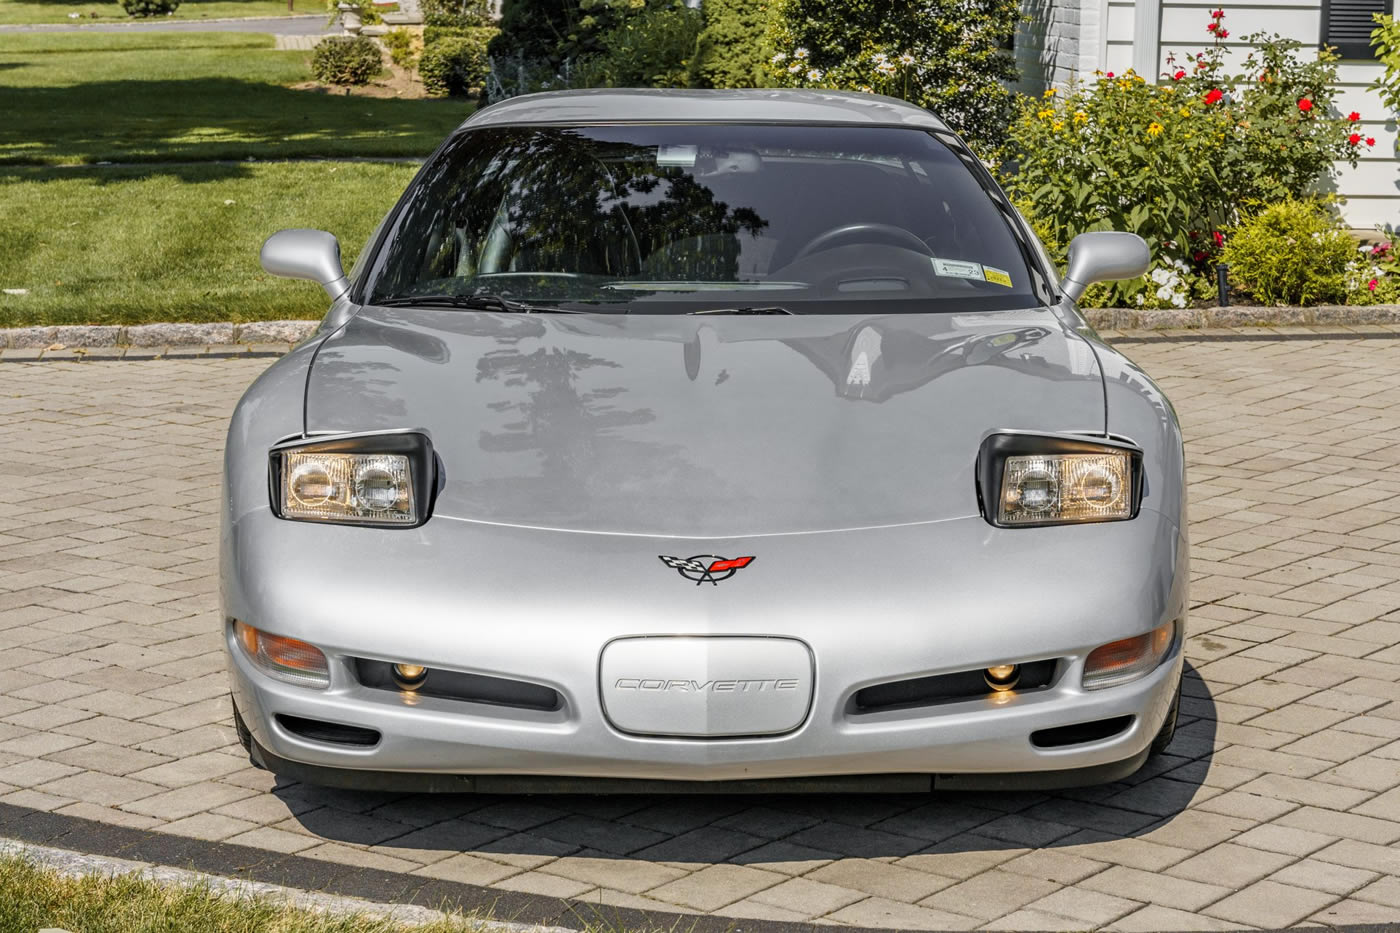 2001 Corvette Coupe in Quicksilver Metallic